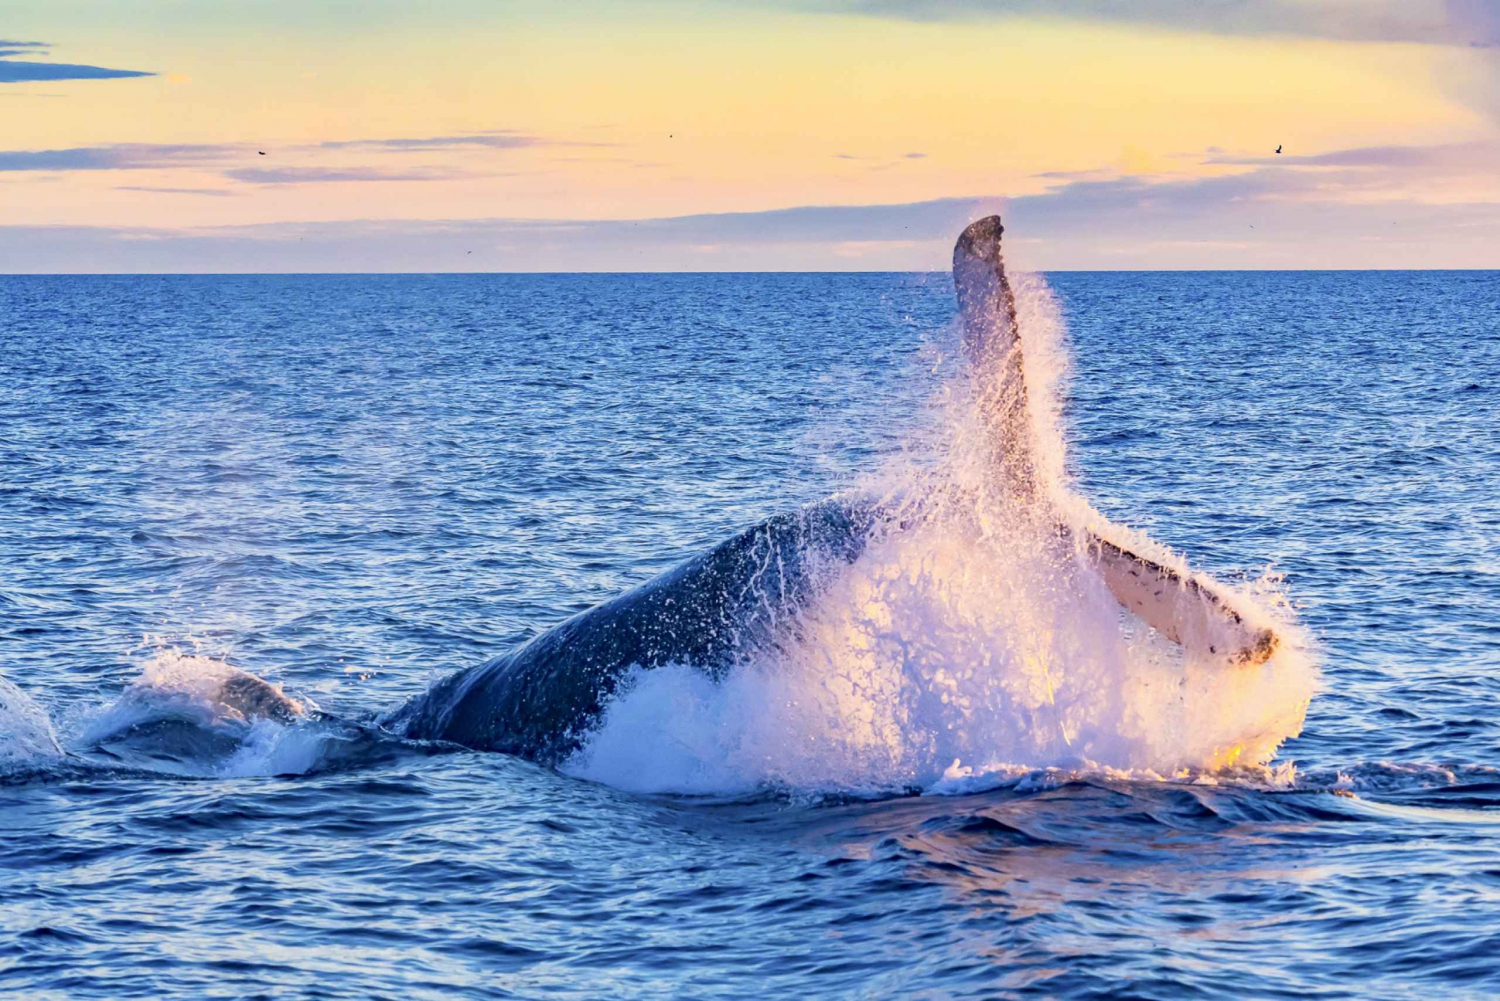 Waikiki Beach: Eco-Friendly Whale Watching Cruise